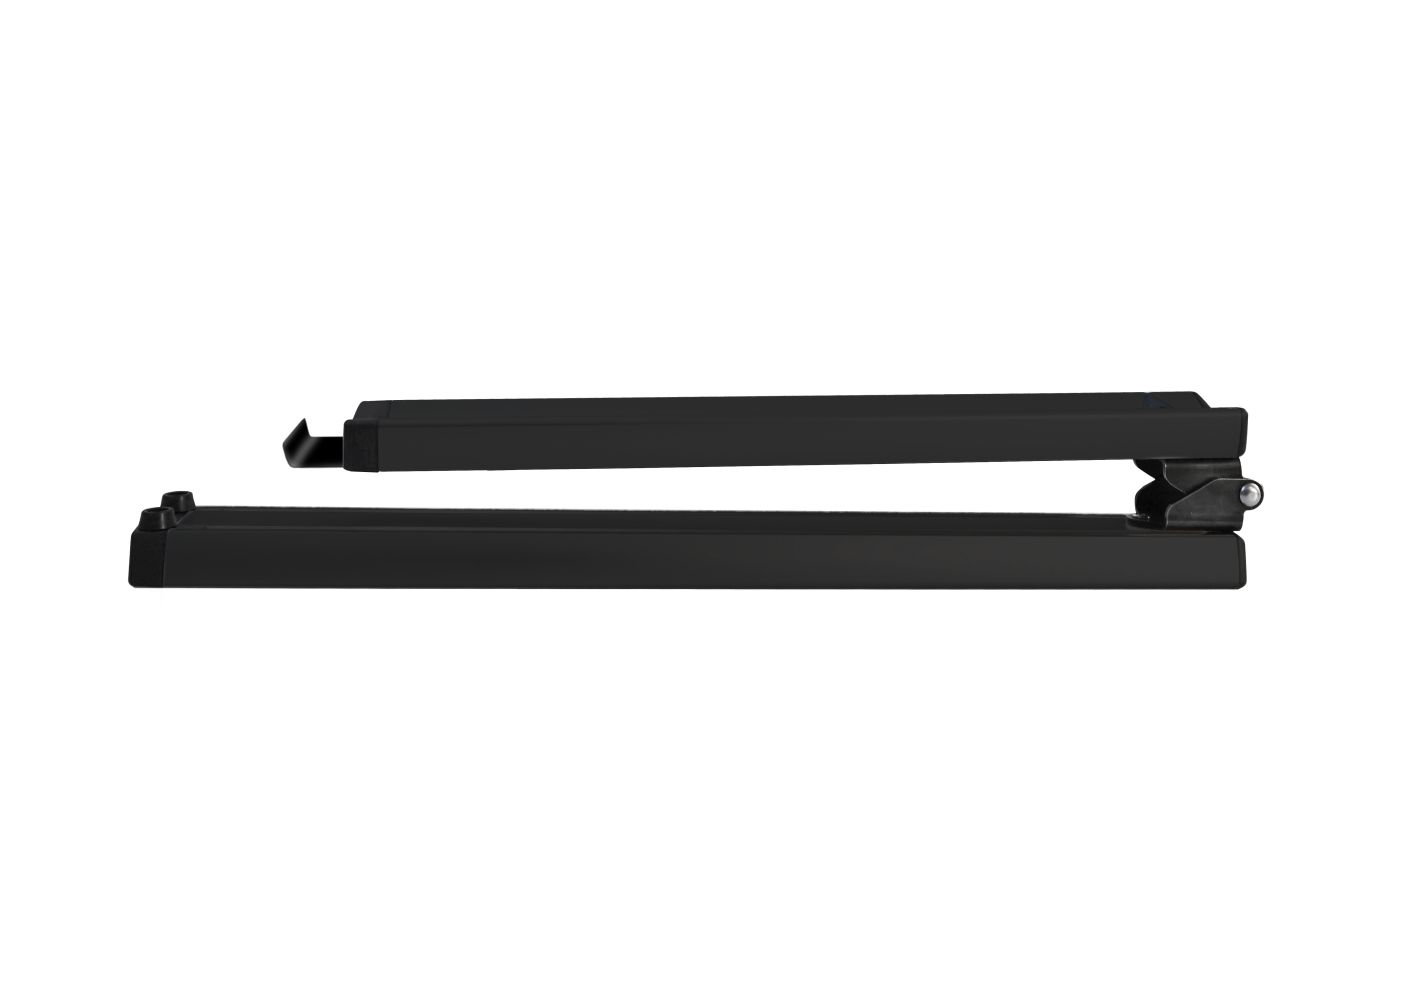 :Atera GENIO PRO black edition folding loading ramp, 022787